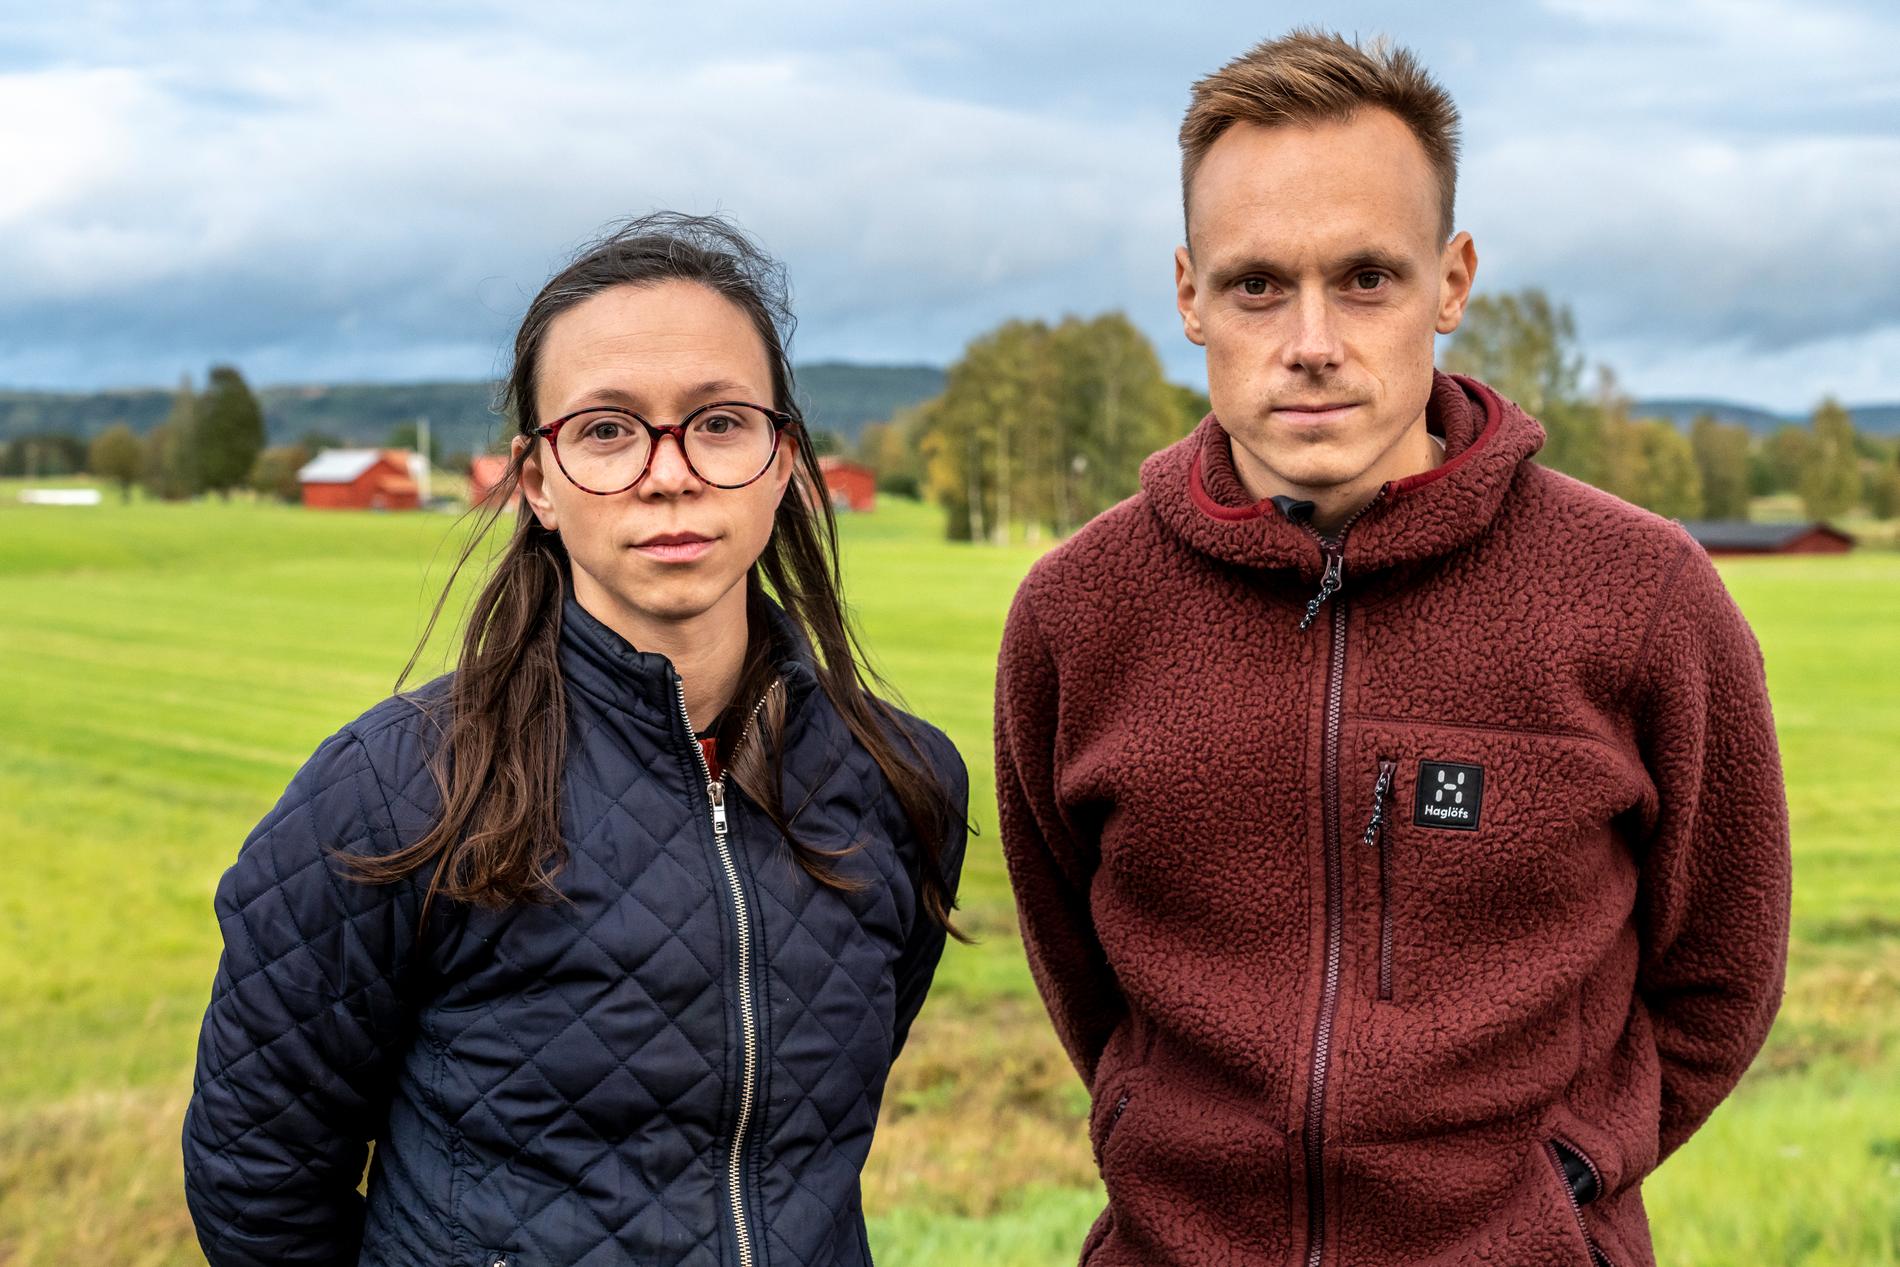 Aftonbladets nyhetsreporter Anna Sjögren och fotograf Pontus Orre.